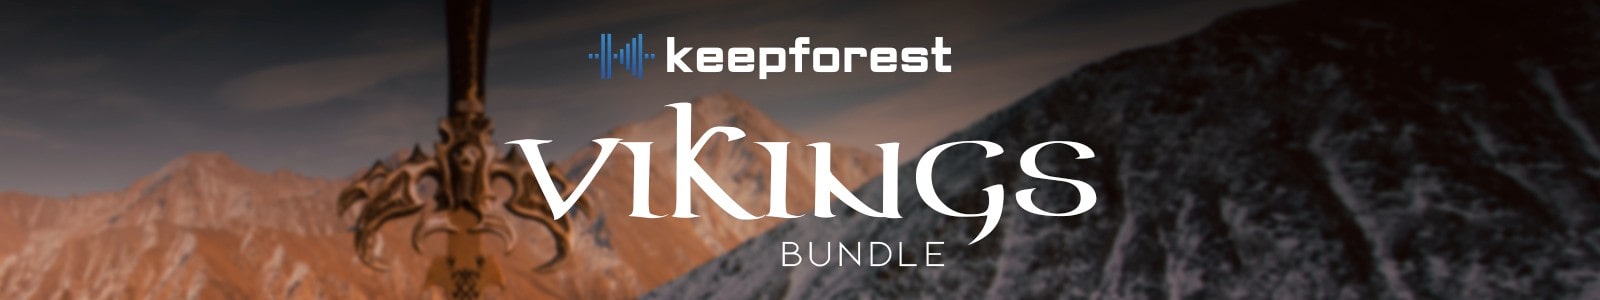 Keepforest Vikings Bundle